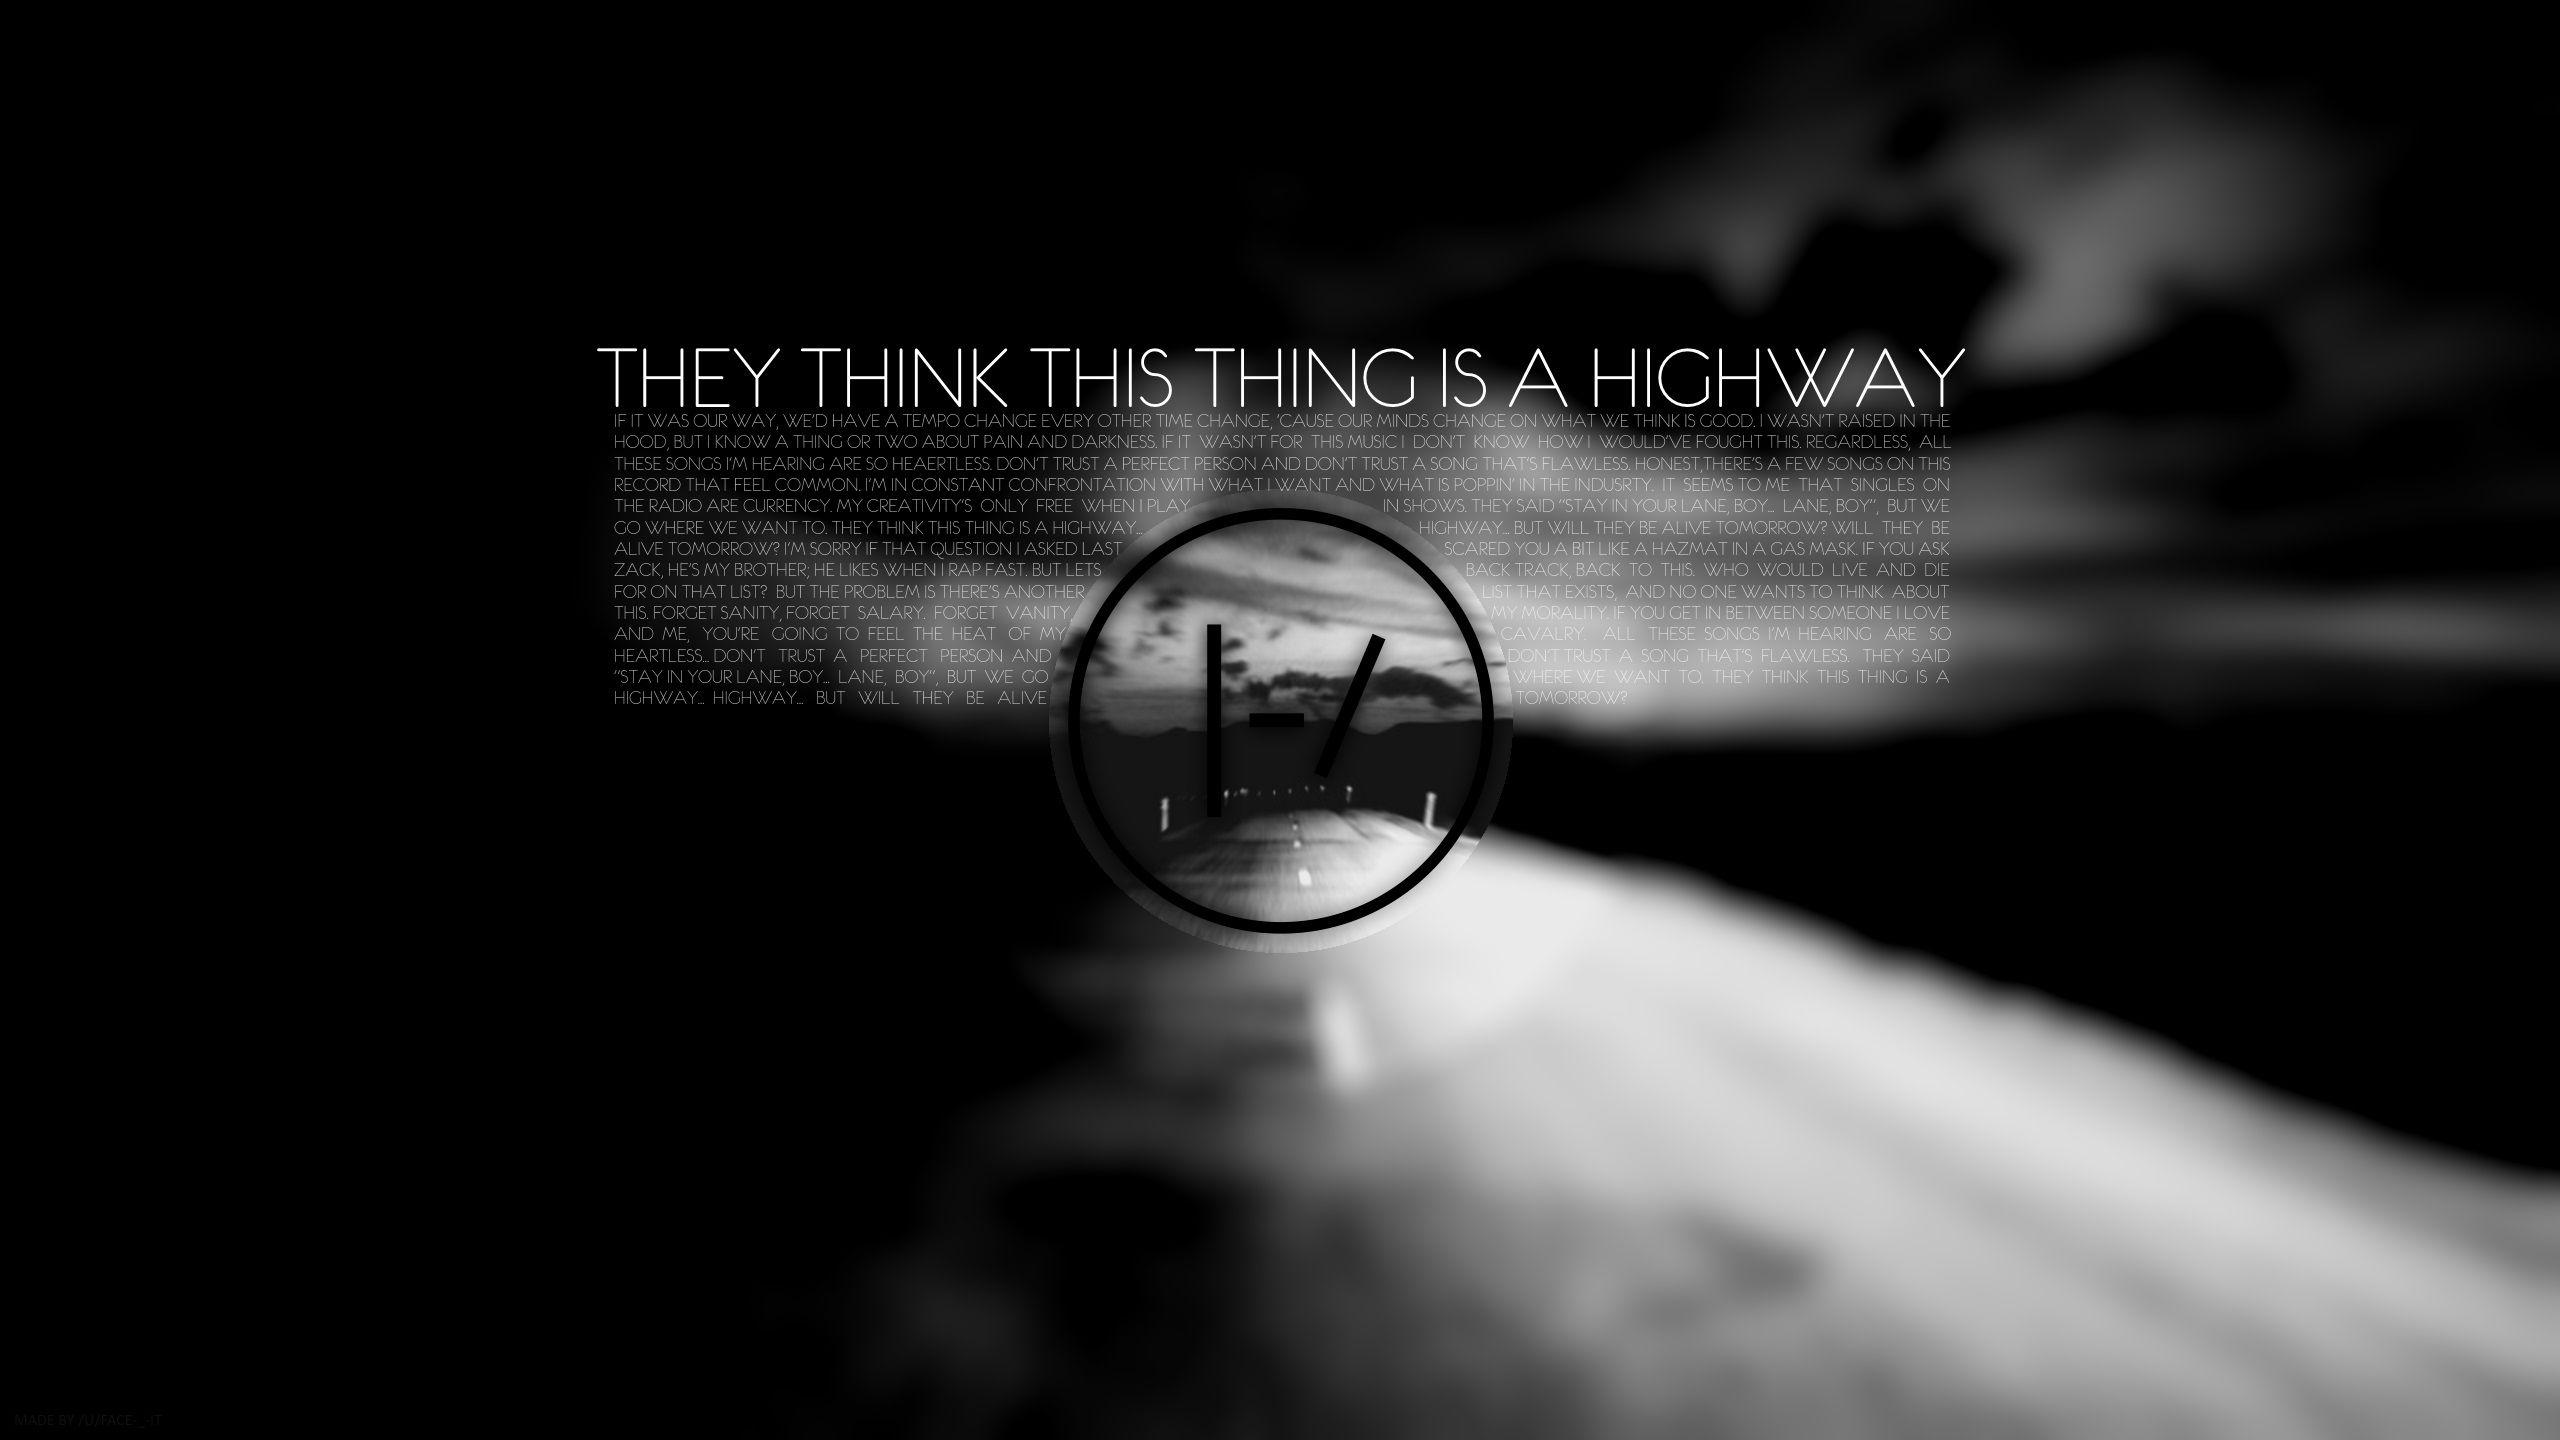 I made a desktop background using lyrics from Blurryface's Lane